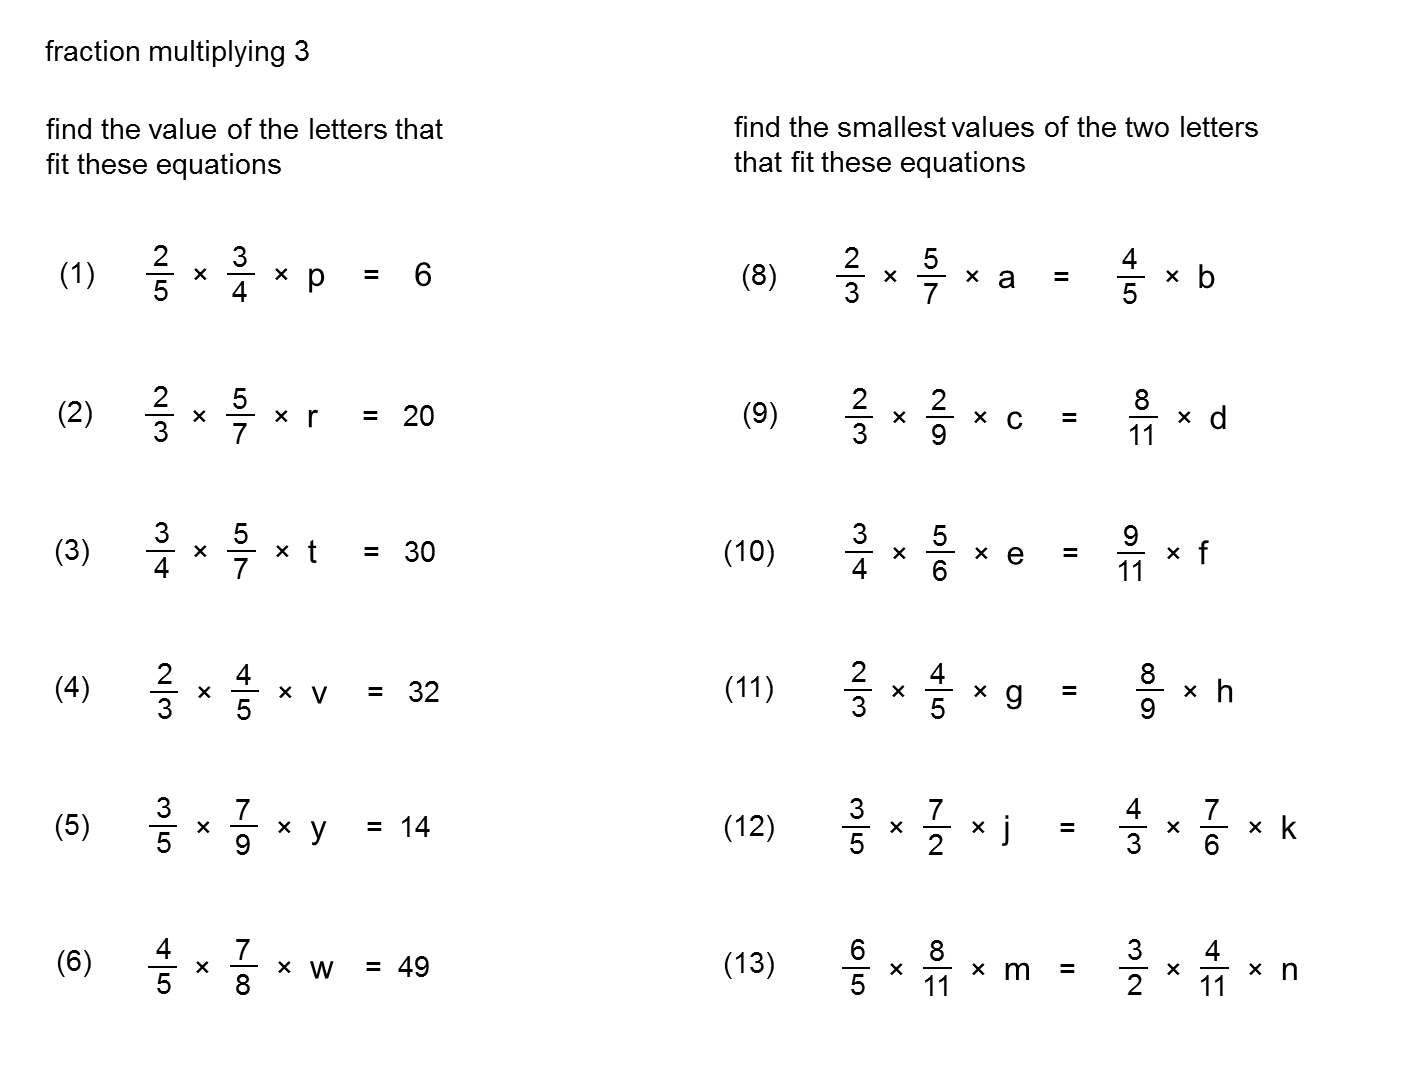 median-don-steward-mathematics-teaching-fraction-multiplication-2